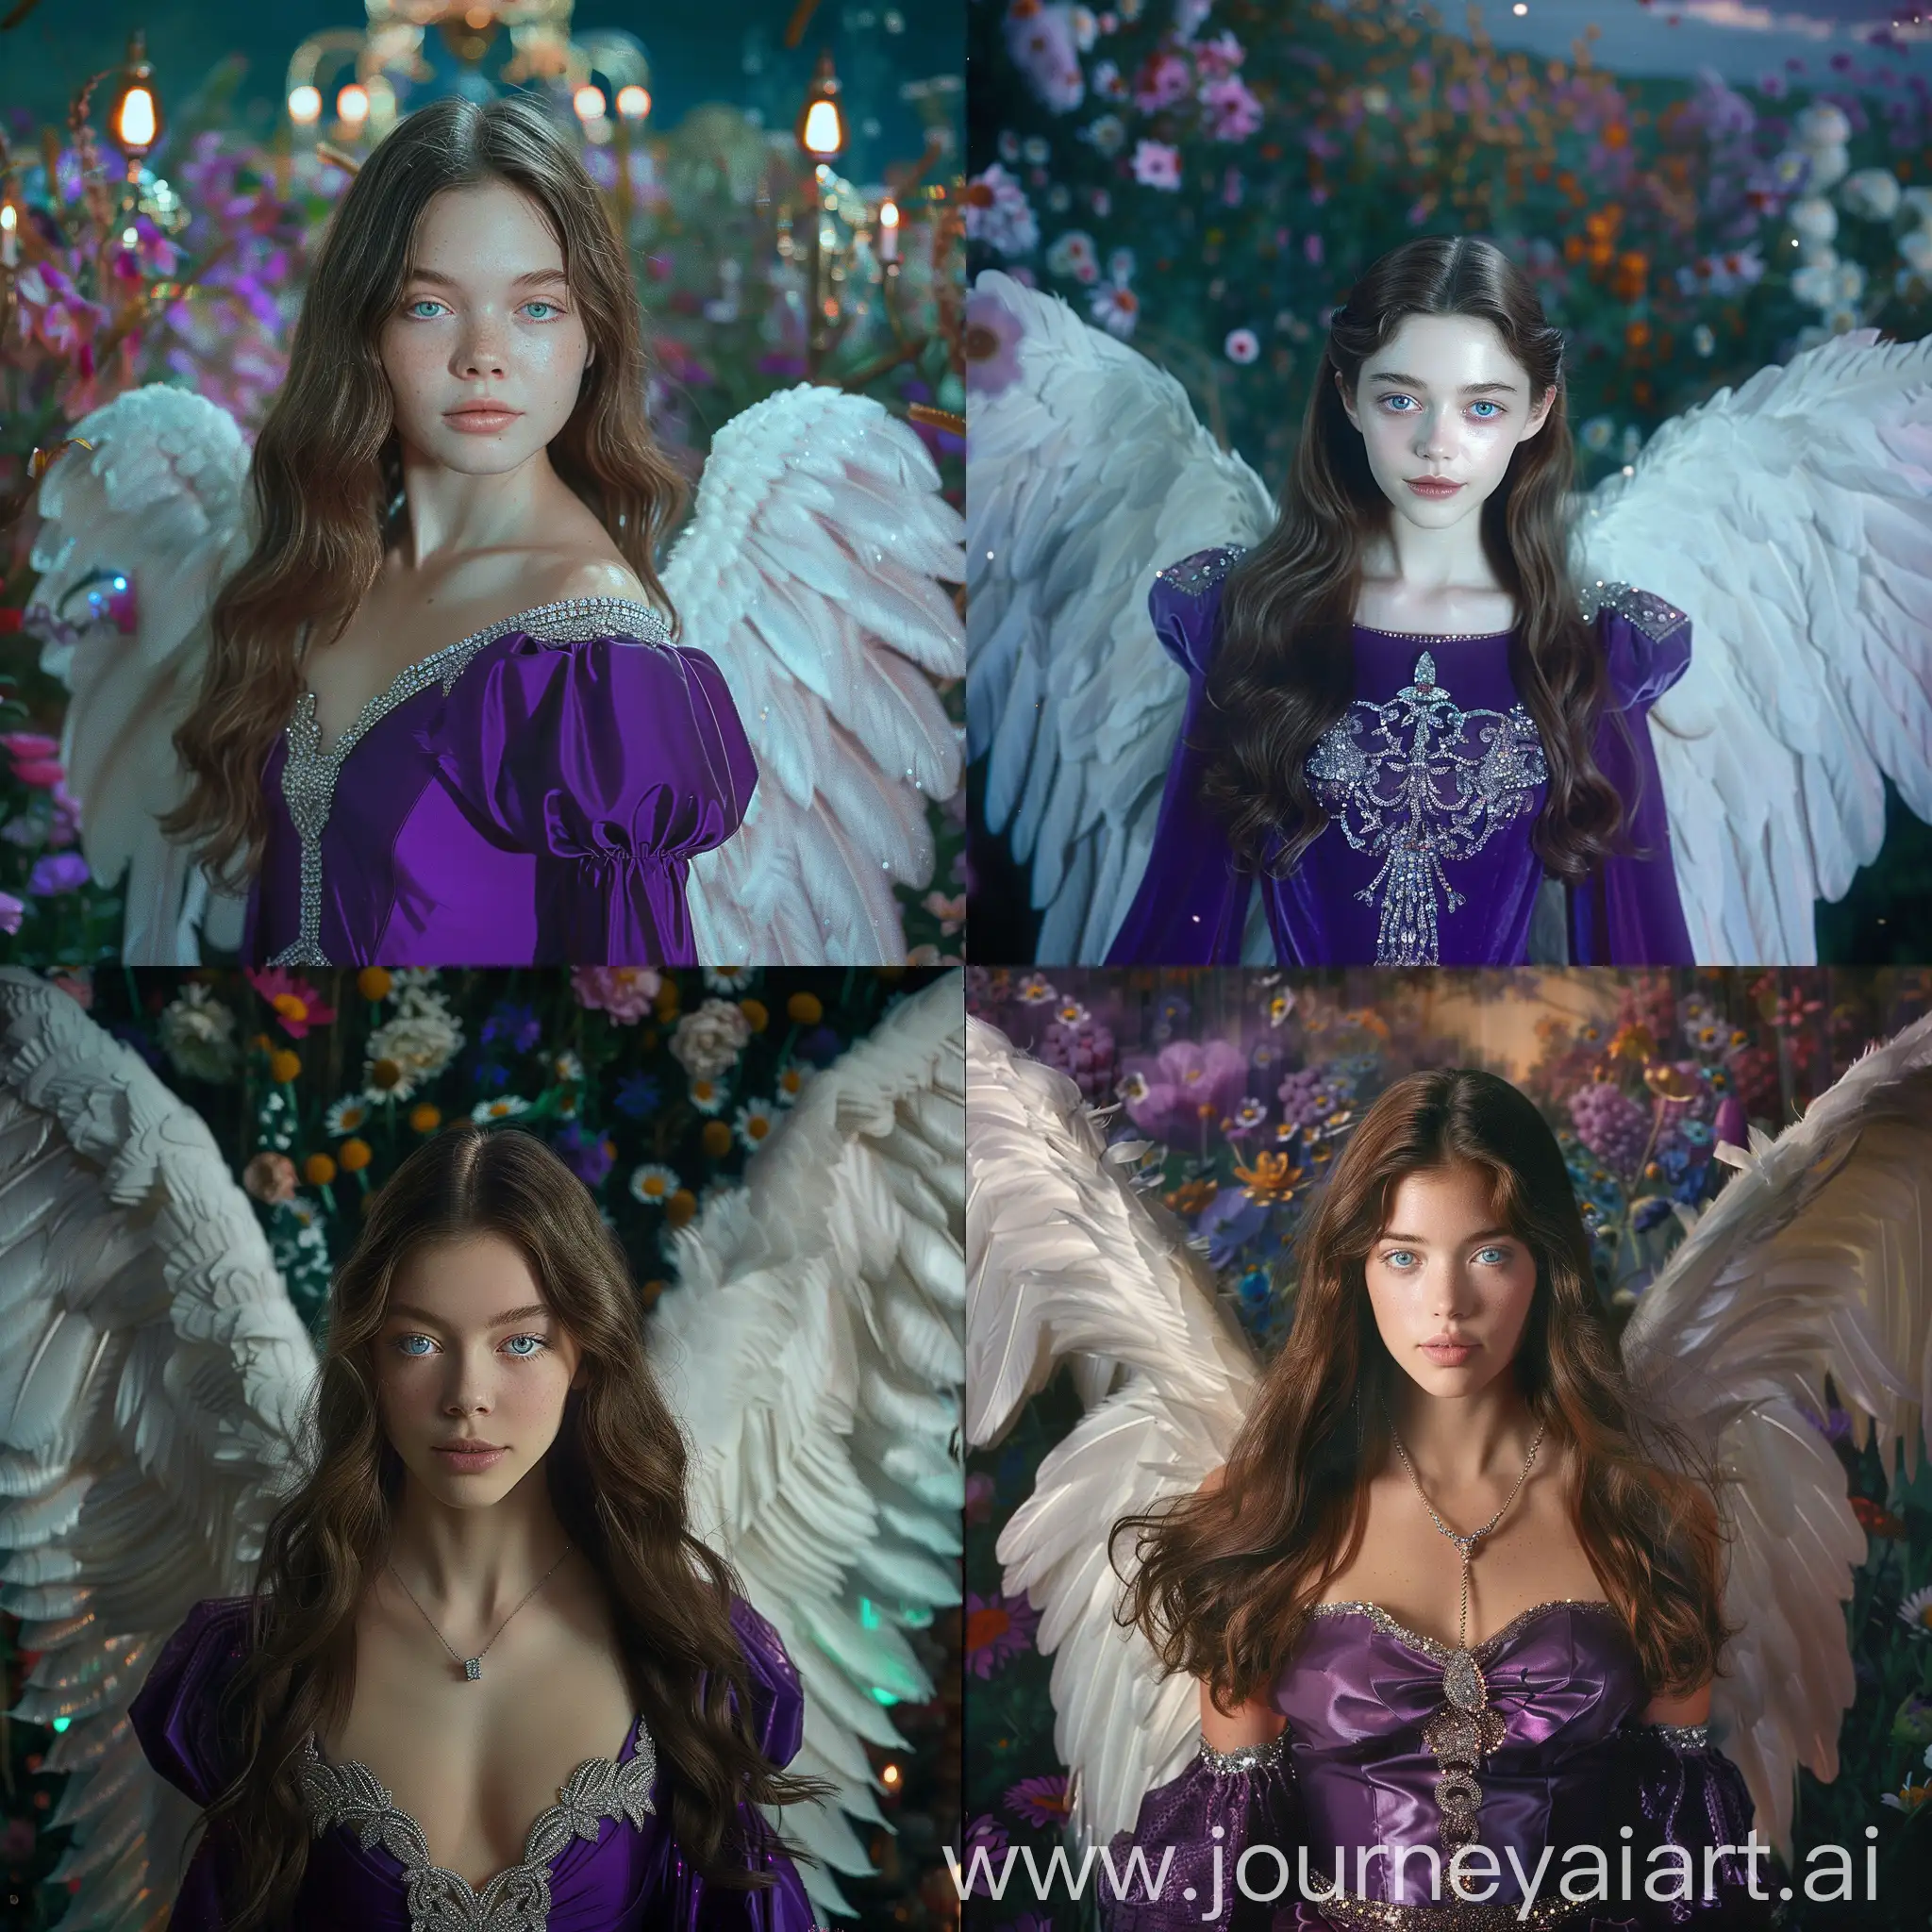 Enchanting-Archangel-in-Alexander-McQueen-Dress-Amidst-Fairytale-Flower-Garden-at-Night